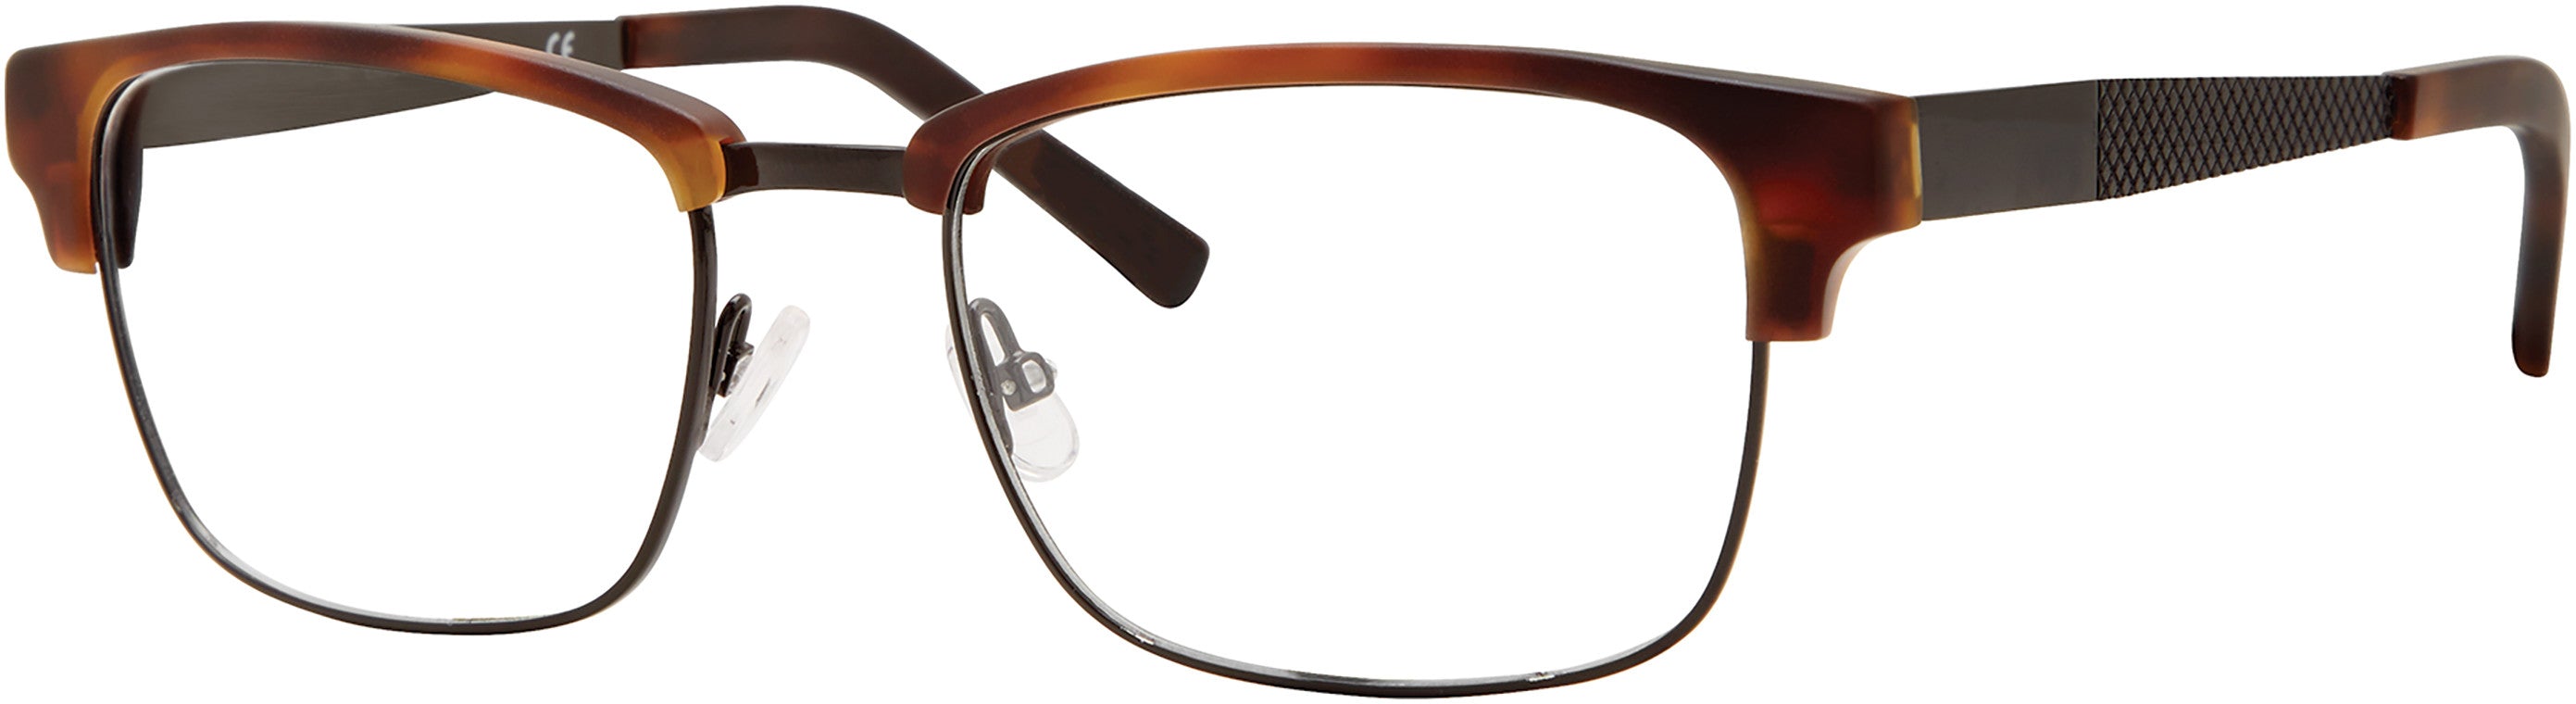  Claiborne 247 Rectangular Eyeglasses 0WR9-0WR9  Brown Havana (00 Demo Lens)